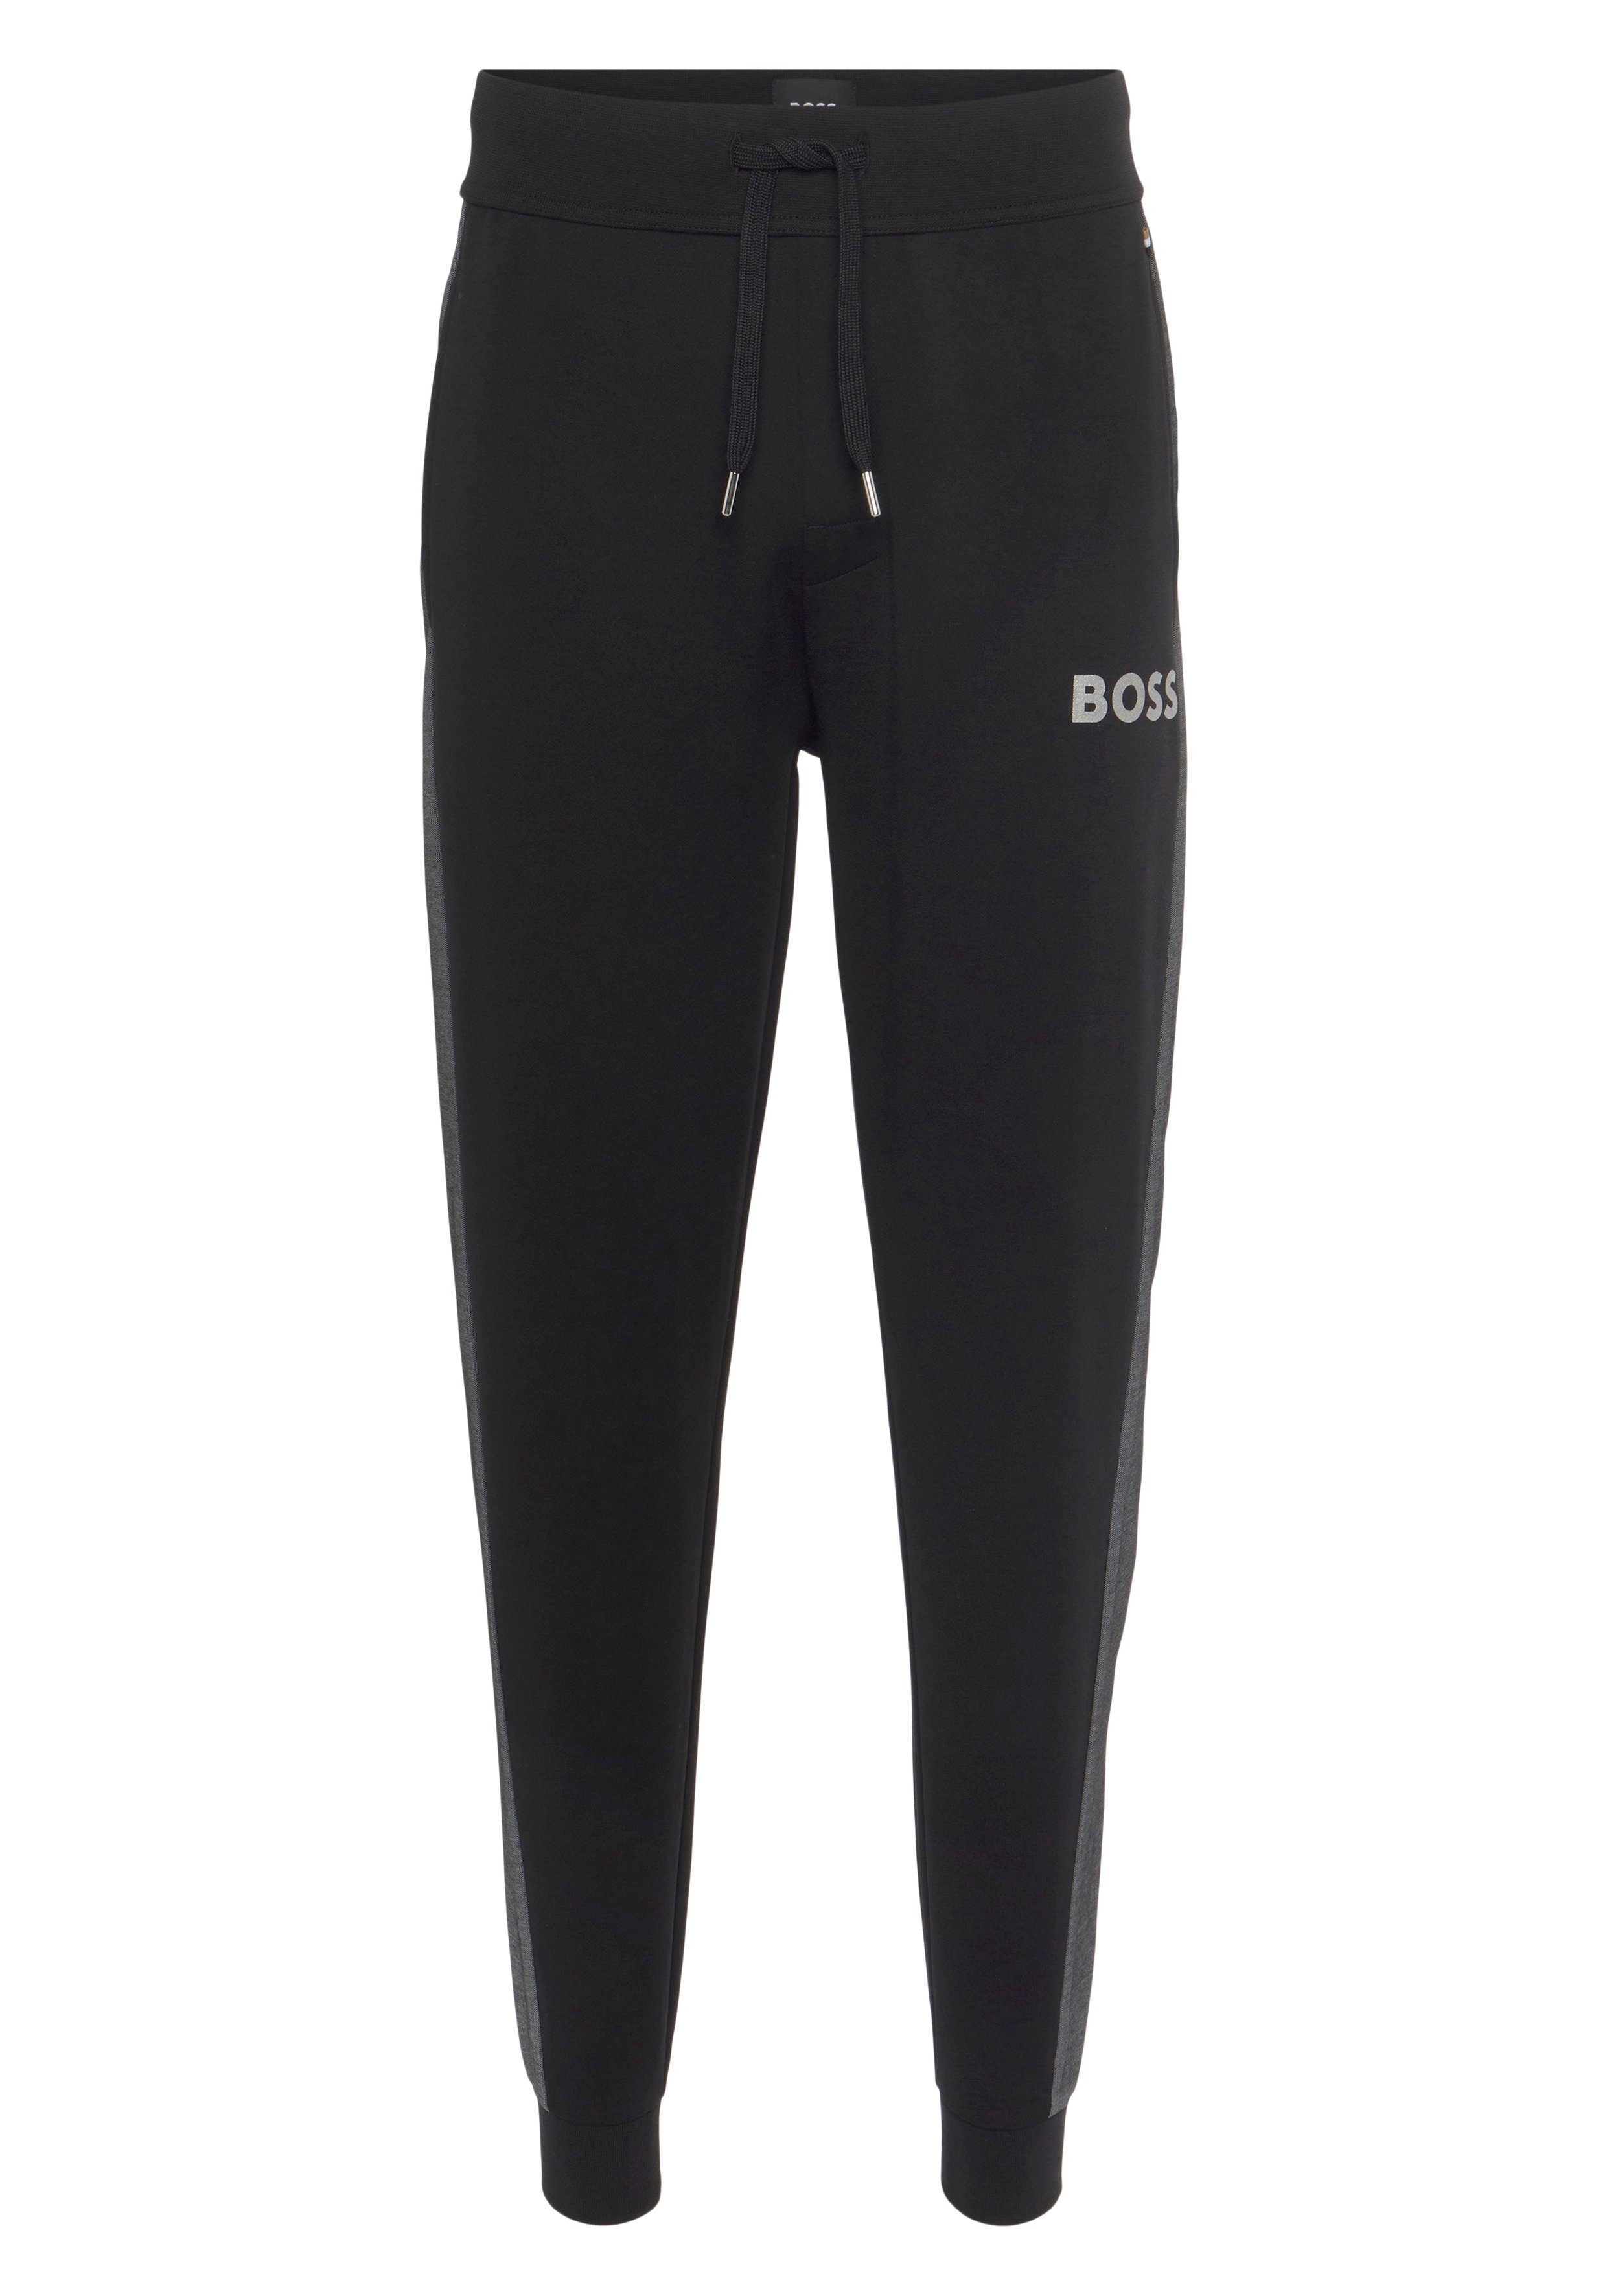 BOSS Homewearhose Tracksuit Pants 10166548 22 mit kontrastfarbenem Seitenstreifen Black